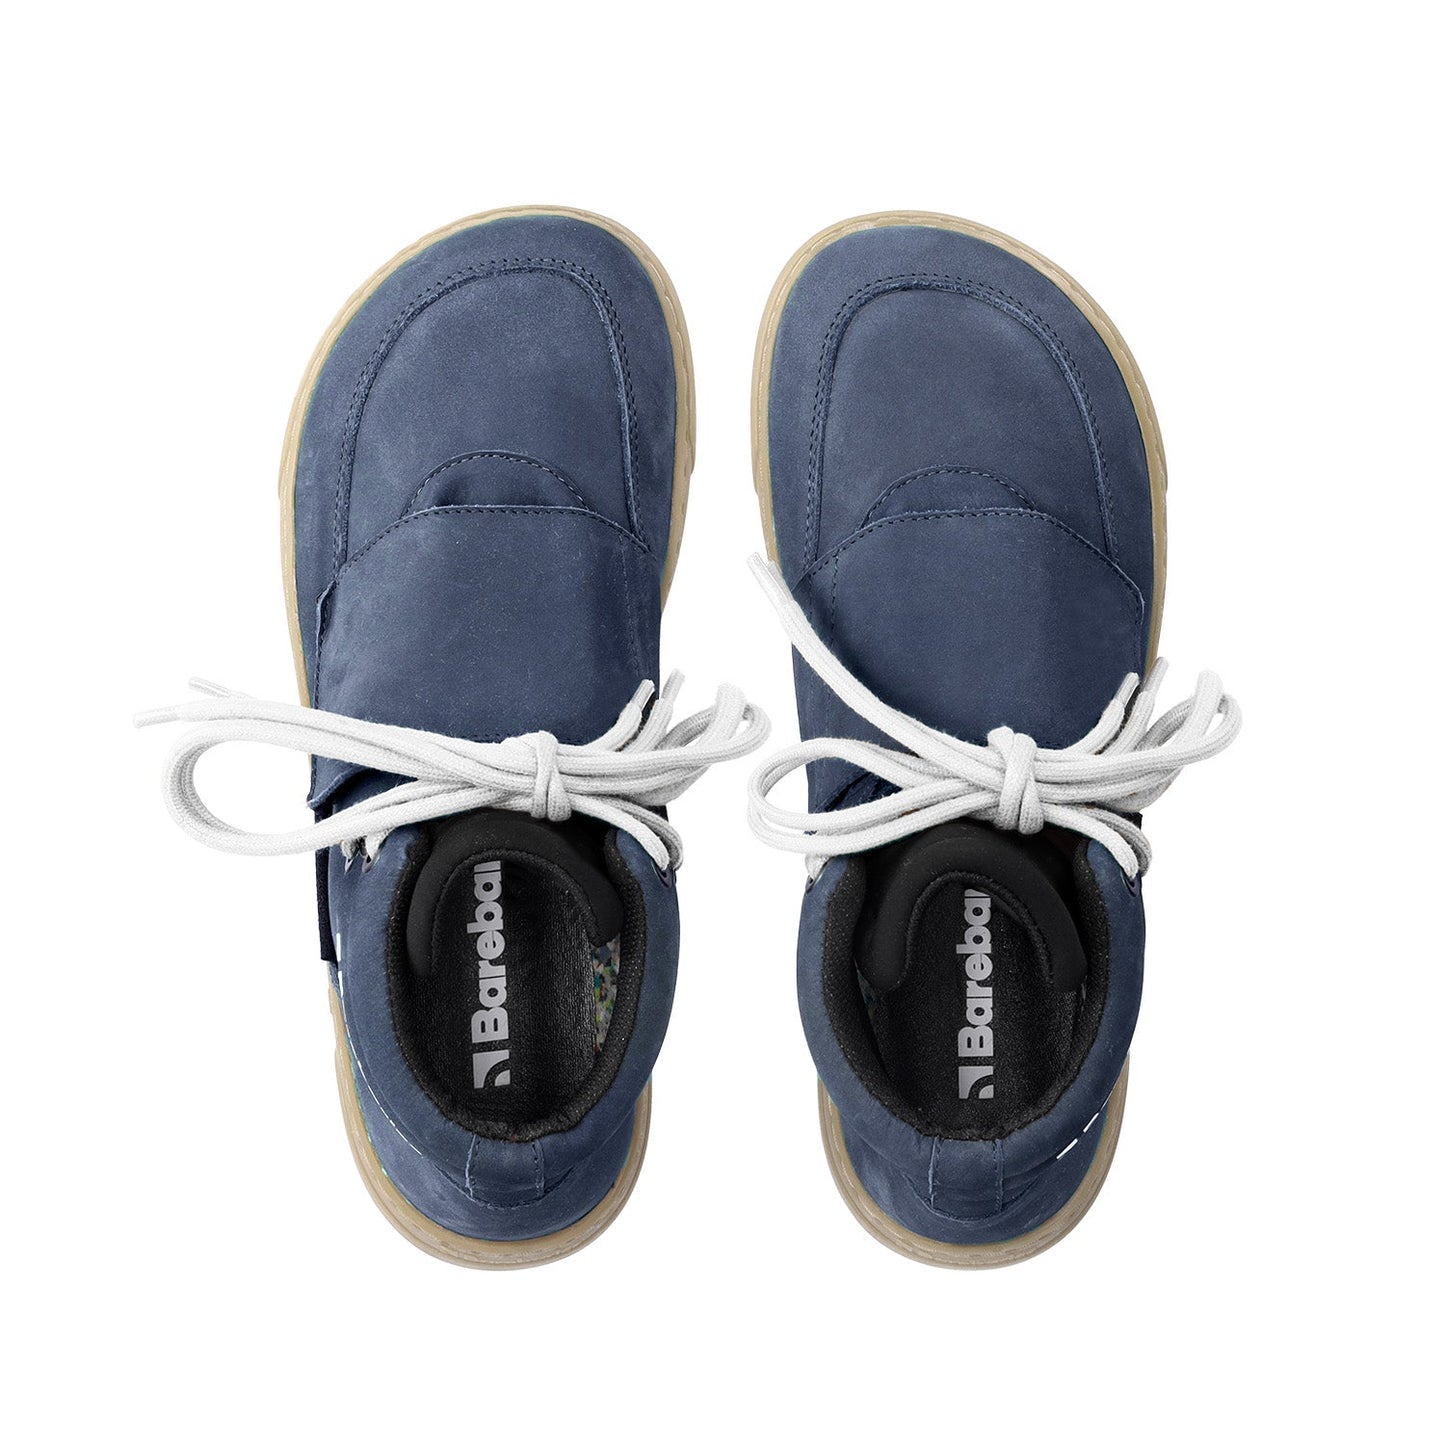 Barefoot Sneakers Barebarics Blizzard - Navy Blue